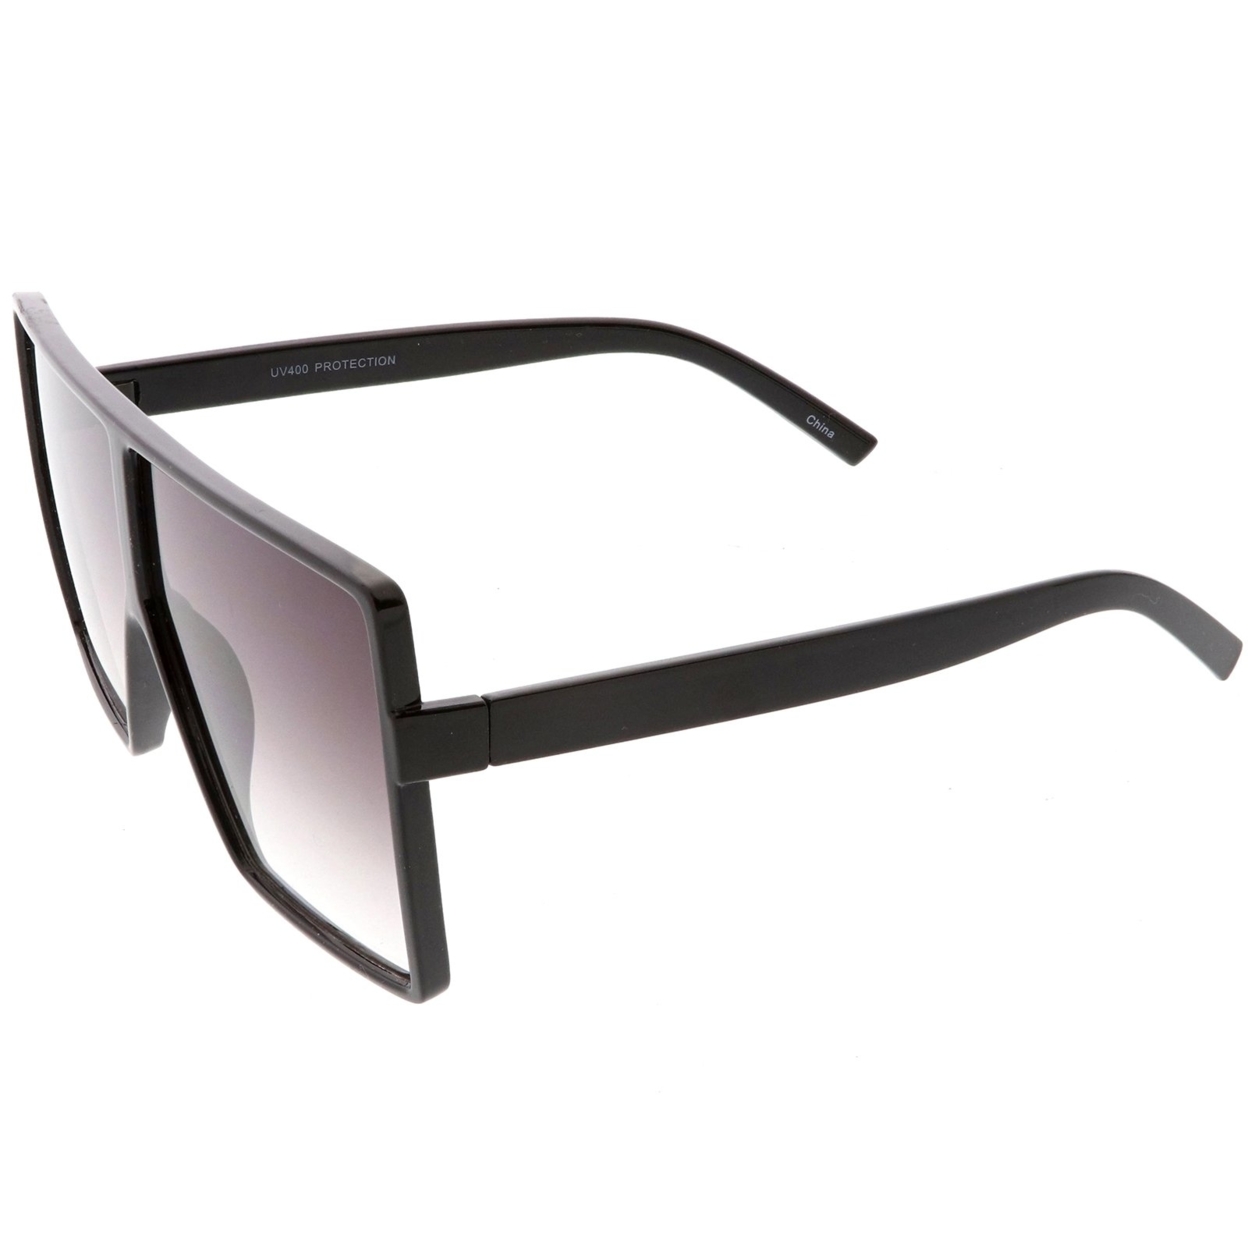 Super Oversize Square Sunglasses Flat Top Neutral Color Flat Lens 69mm - Black / Lavender